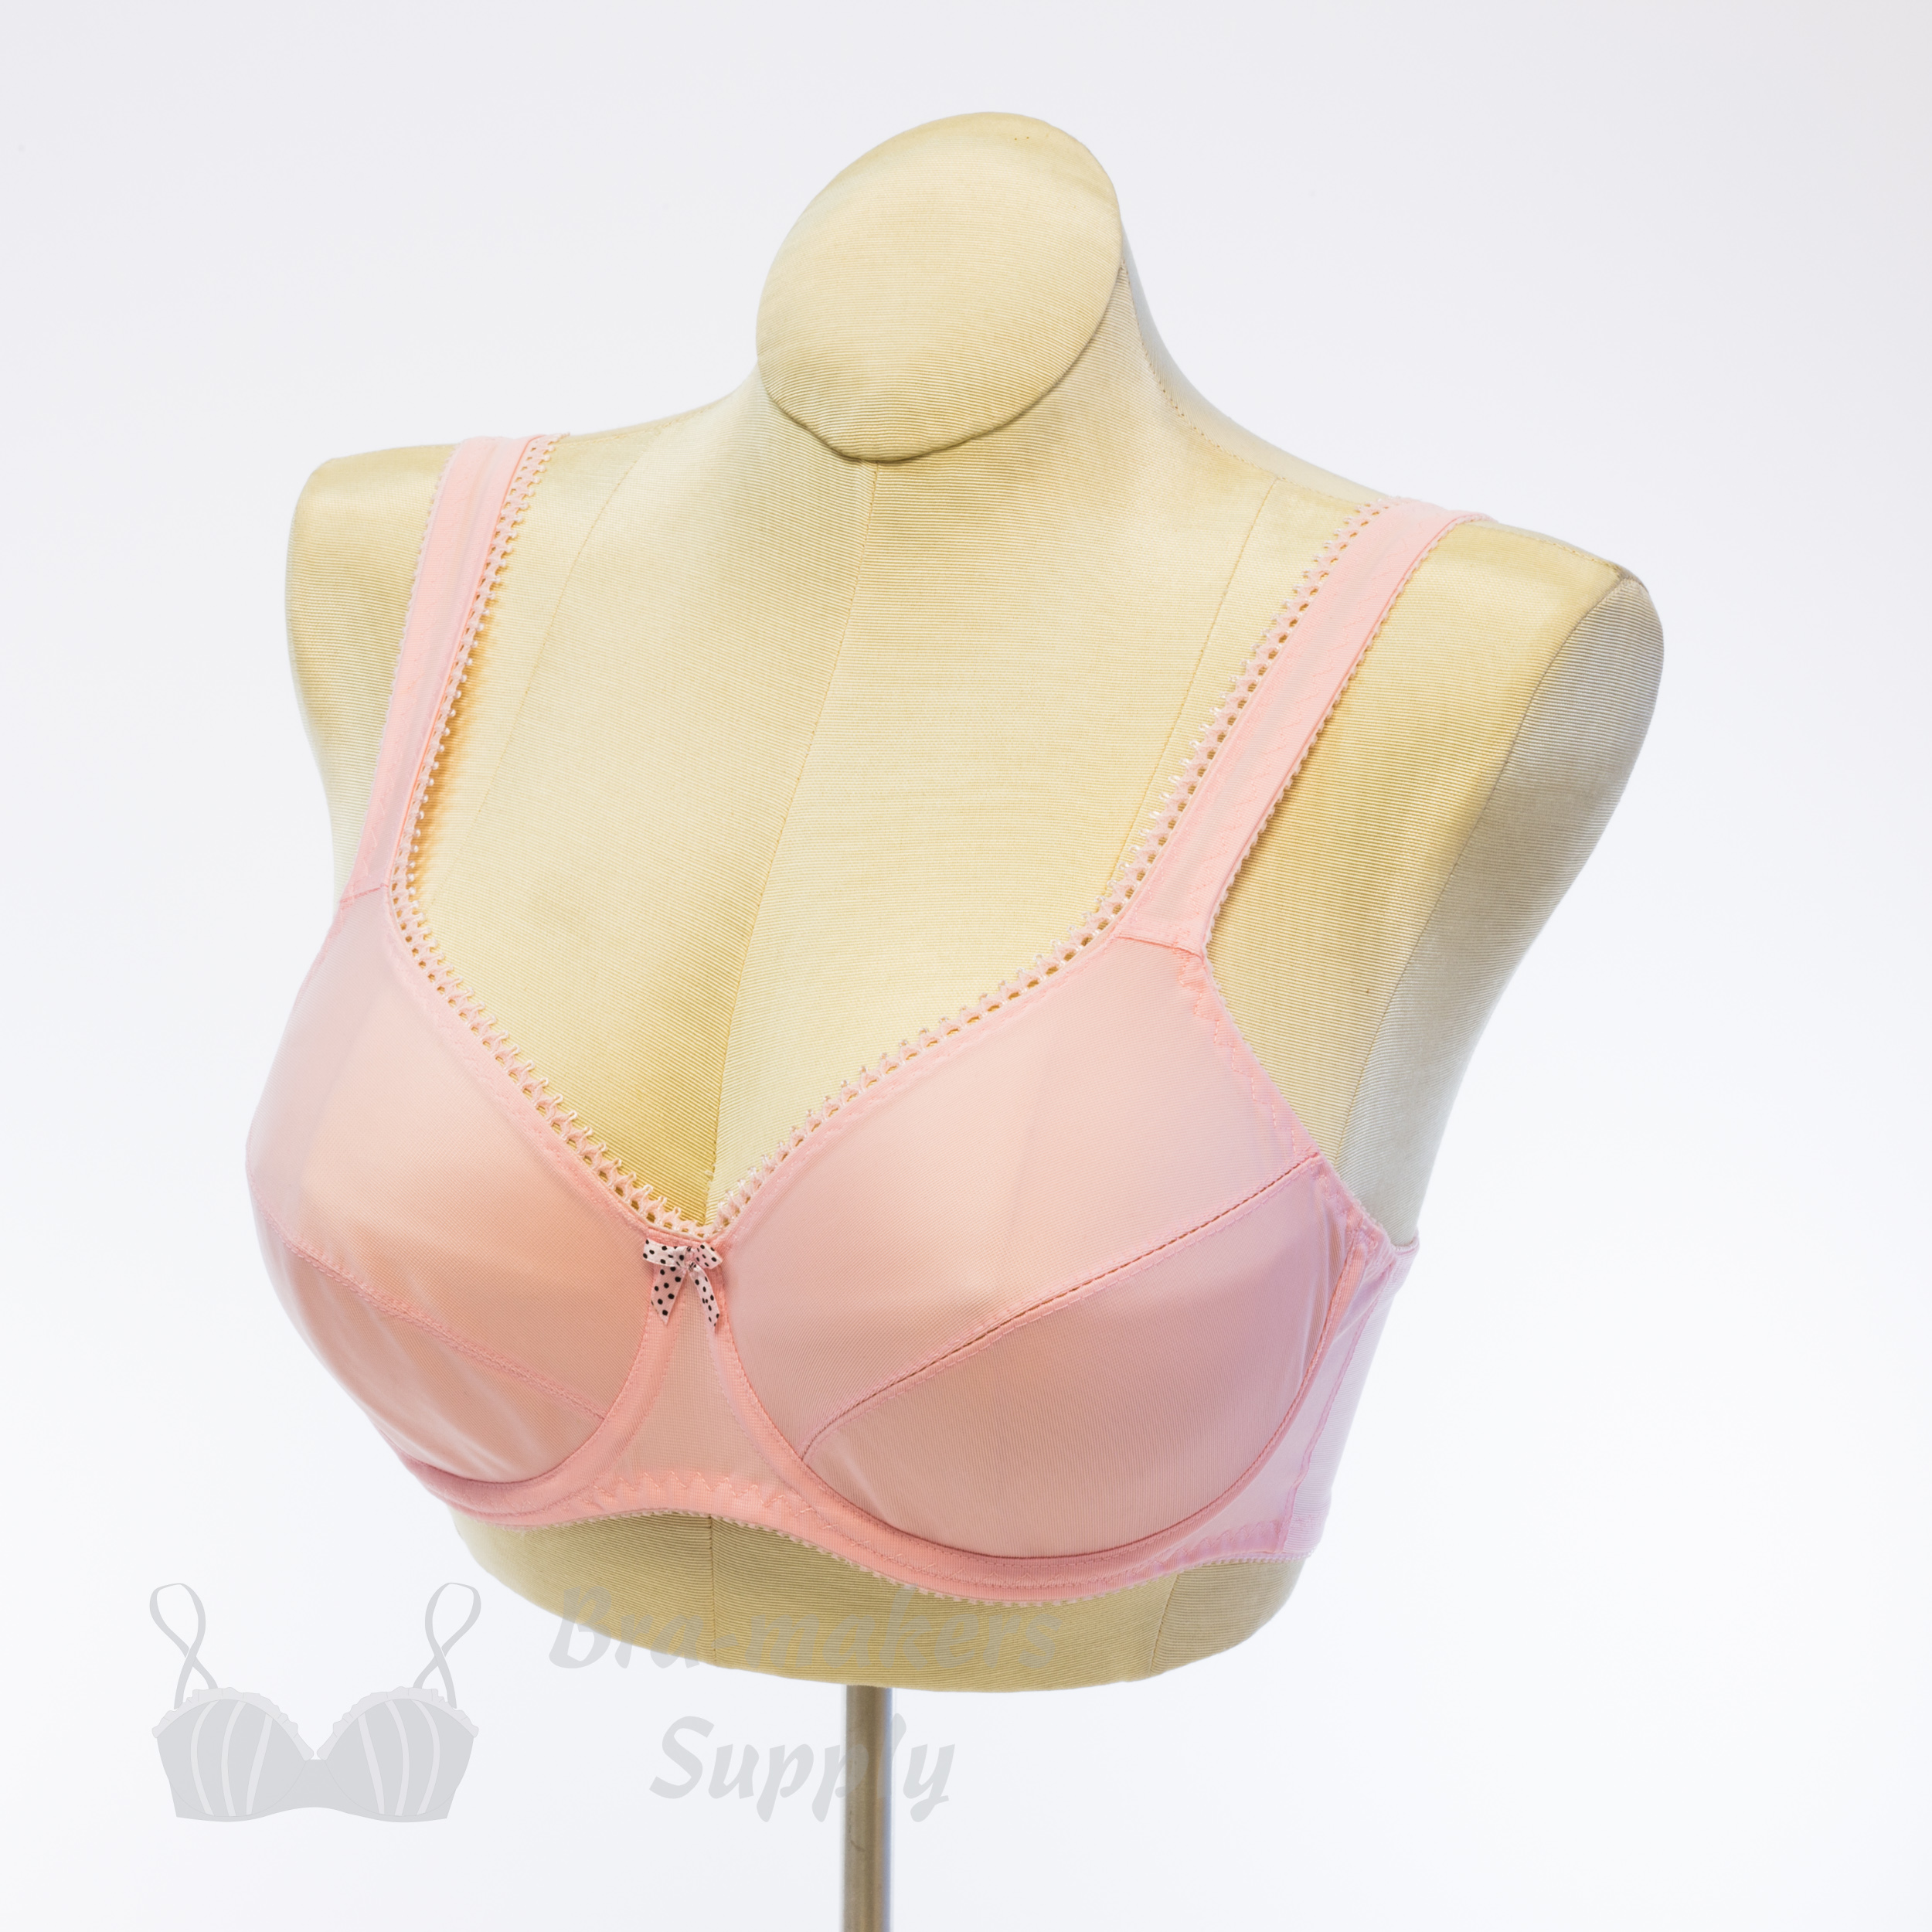 https://www.braandcorsetsupplies.com/wp-content/uploads/2016/06/Bra-Makers-Supply-Bra-Corset-Samples-Gallery-pink-classic-full-band-bra.jpg